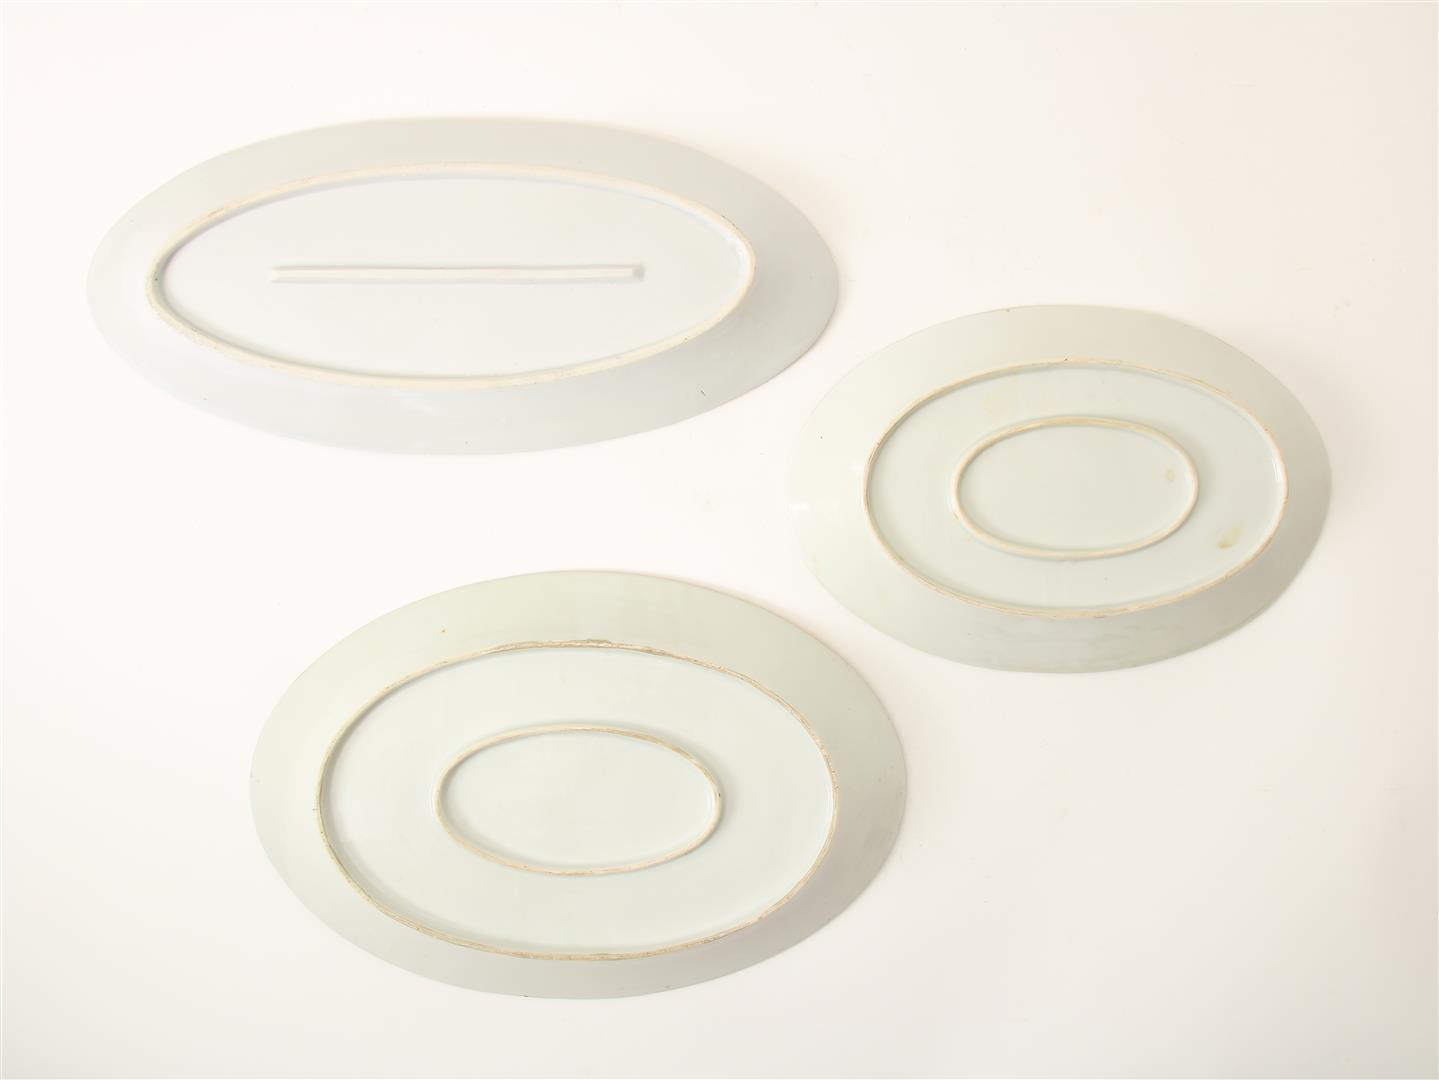 Series of 3 porcelain Kutani serving bowls with Mount Fuji decor, signed bottom right, Japan, - Image 2 of 3